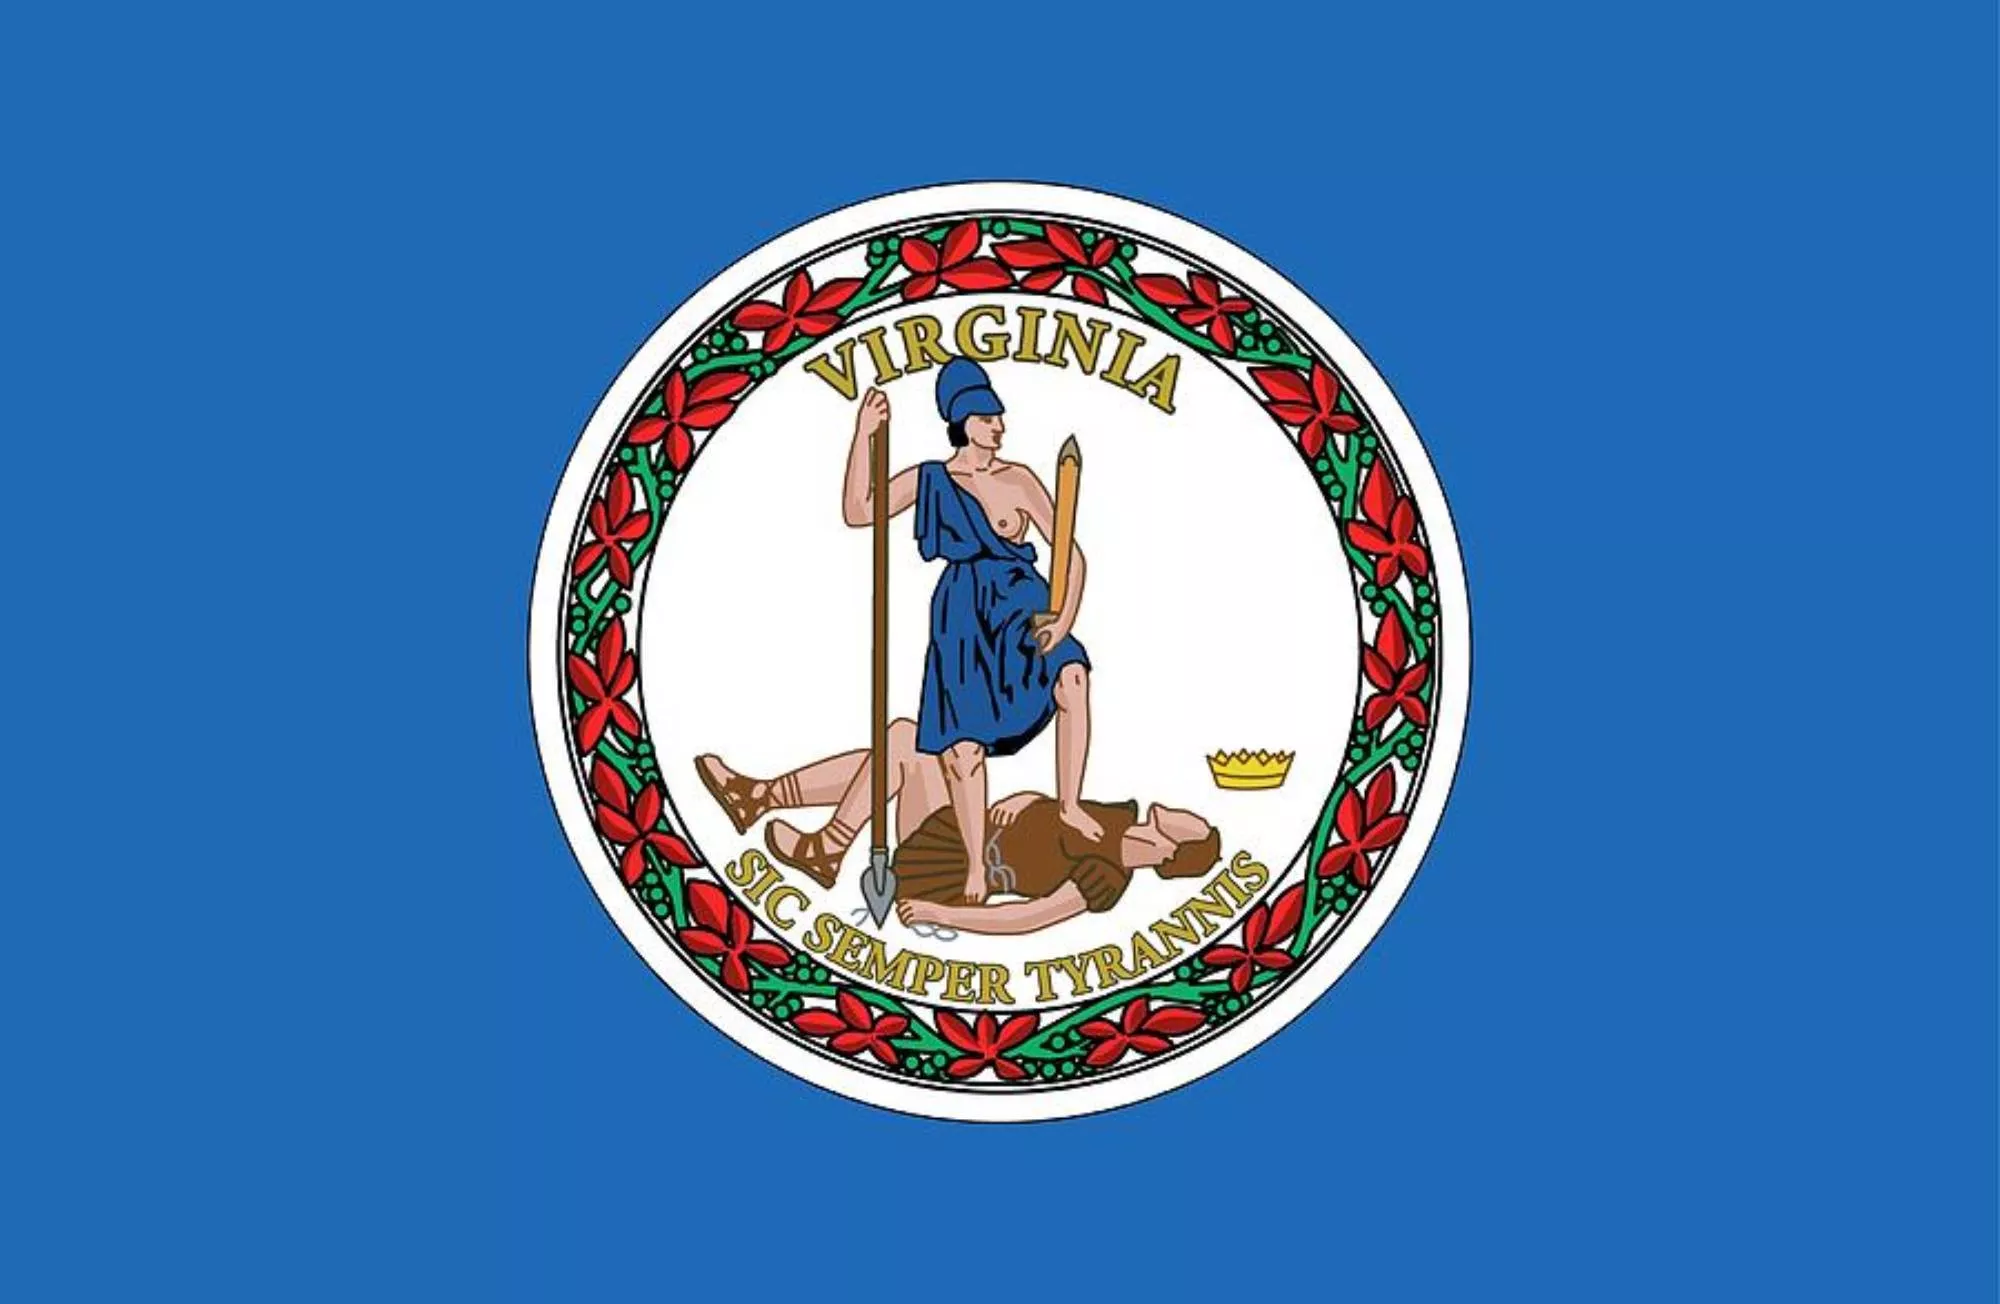 virginia state flag